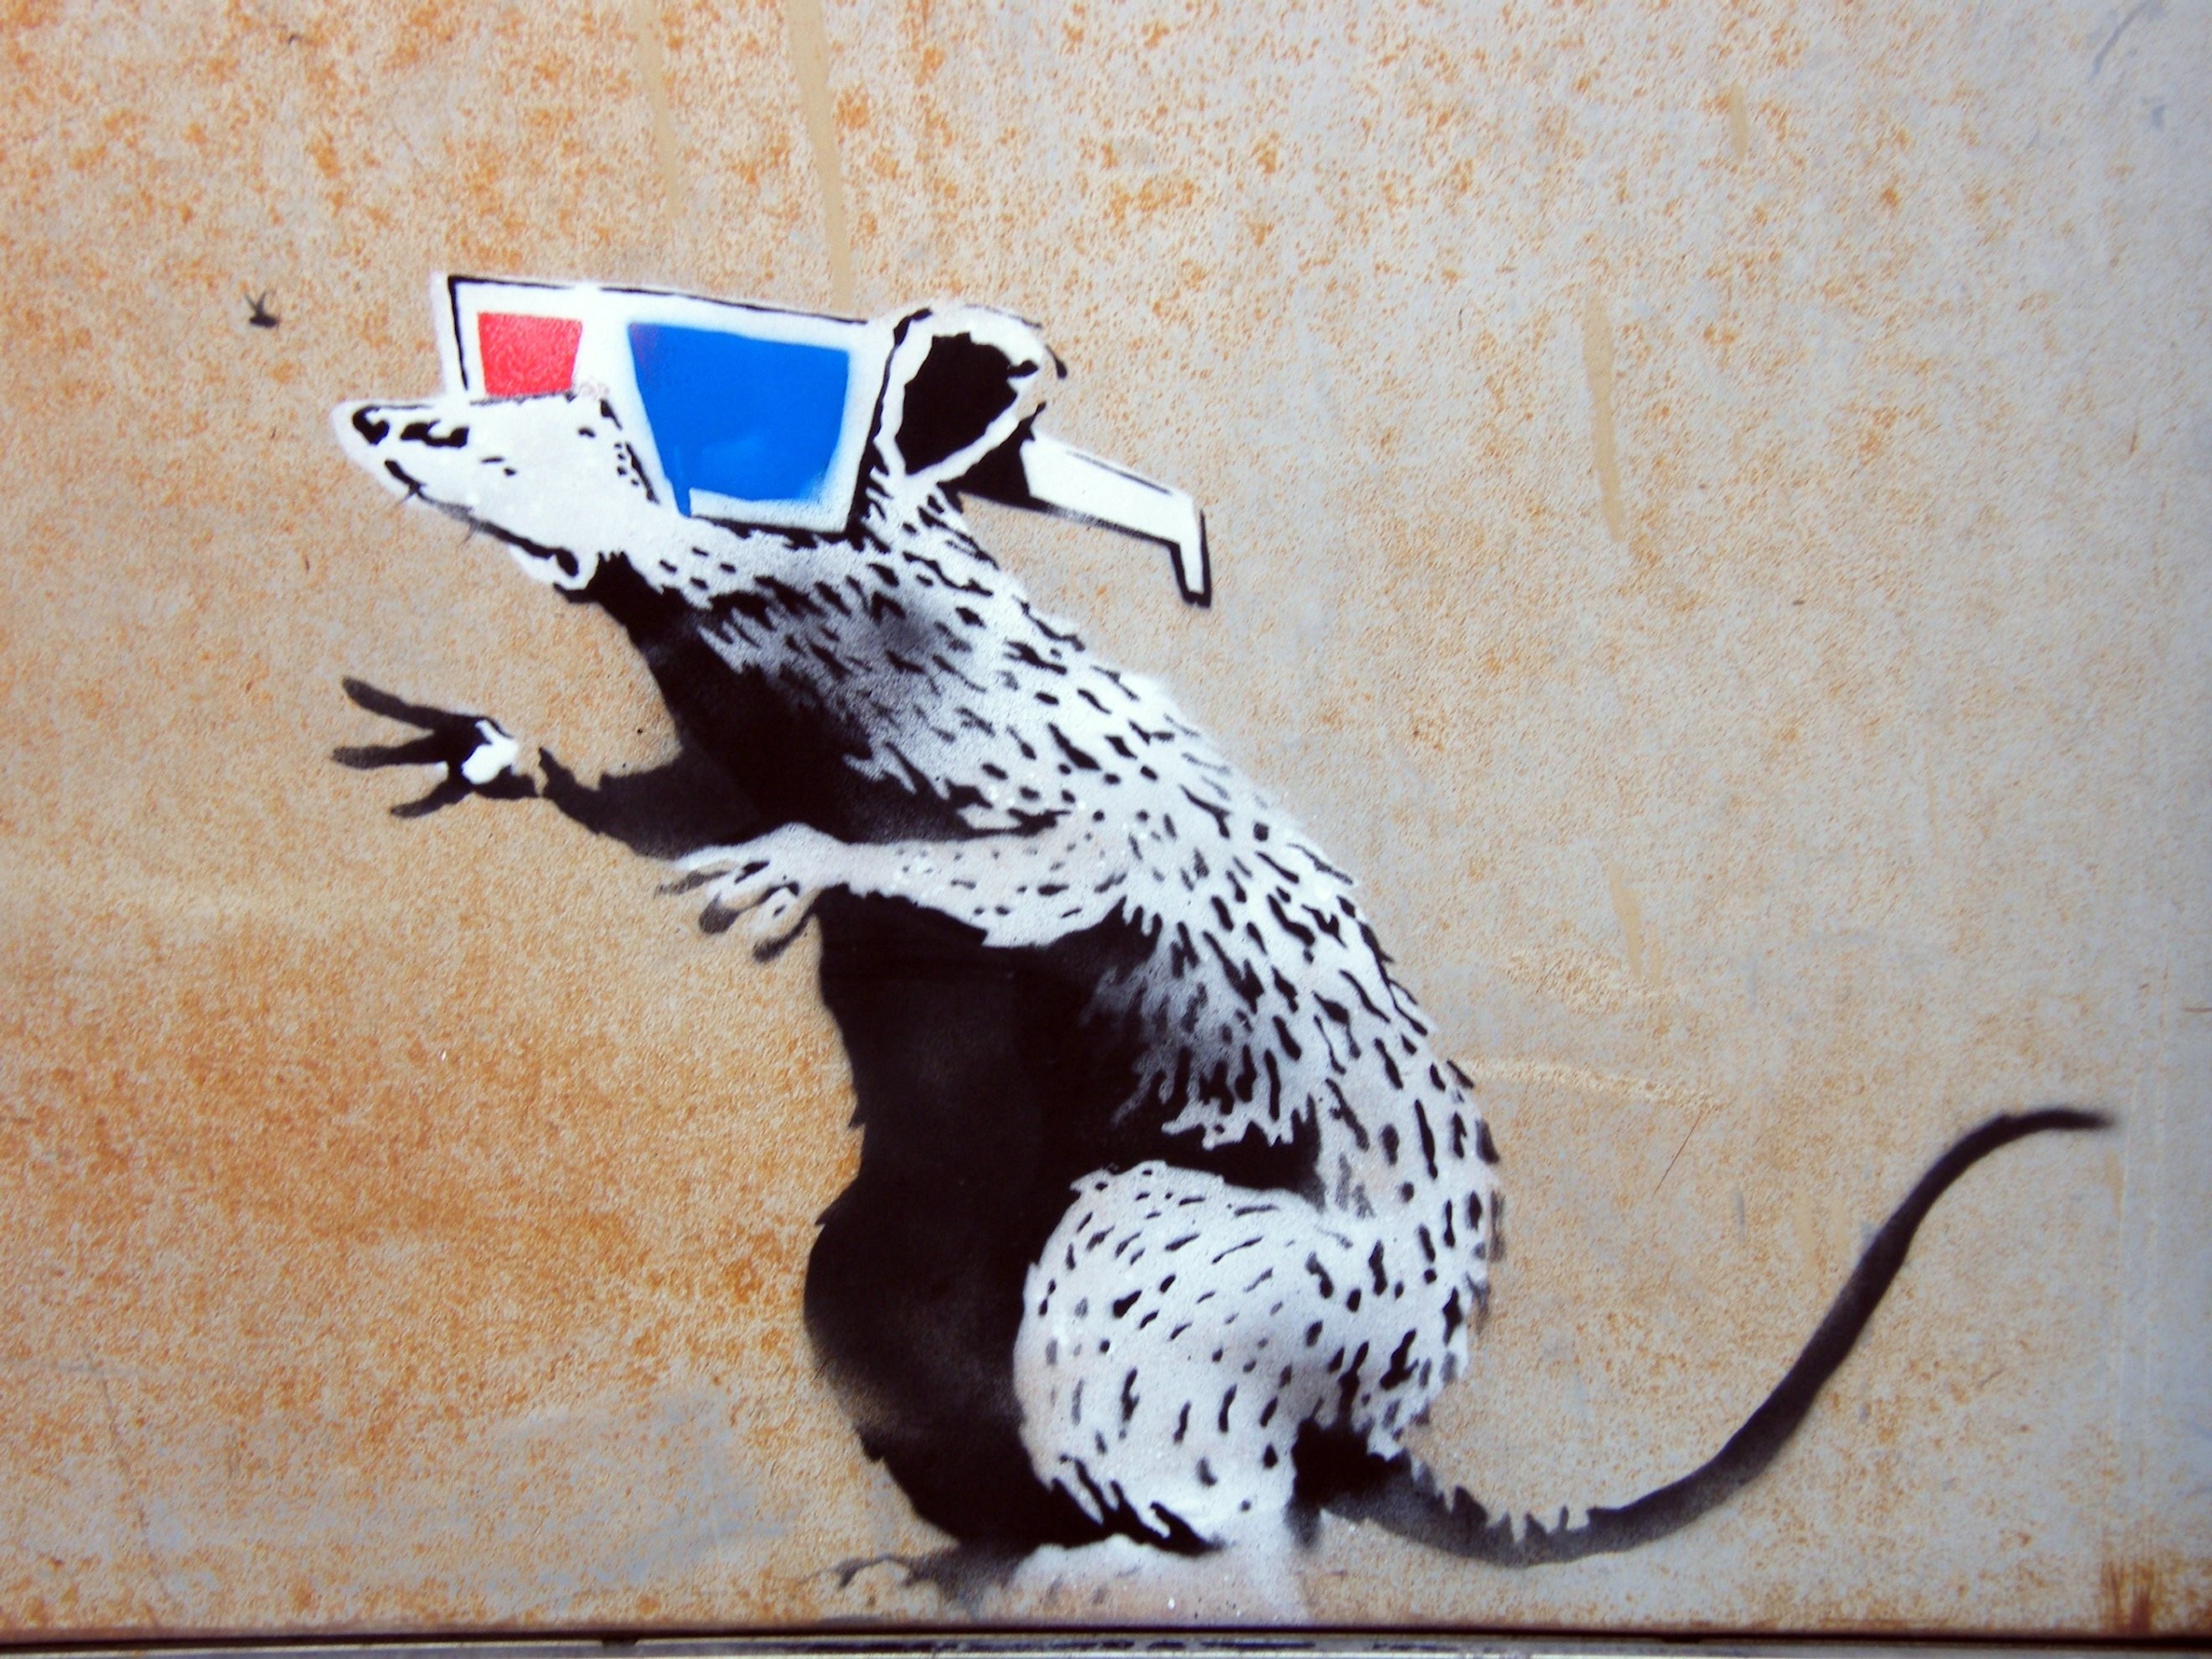 2640x1980 ... Banksy, street art - related desktop wallpaper ...